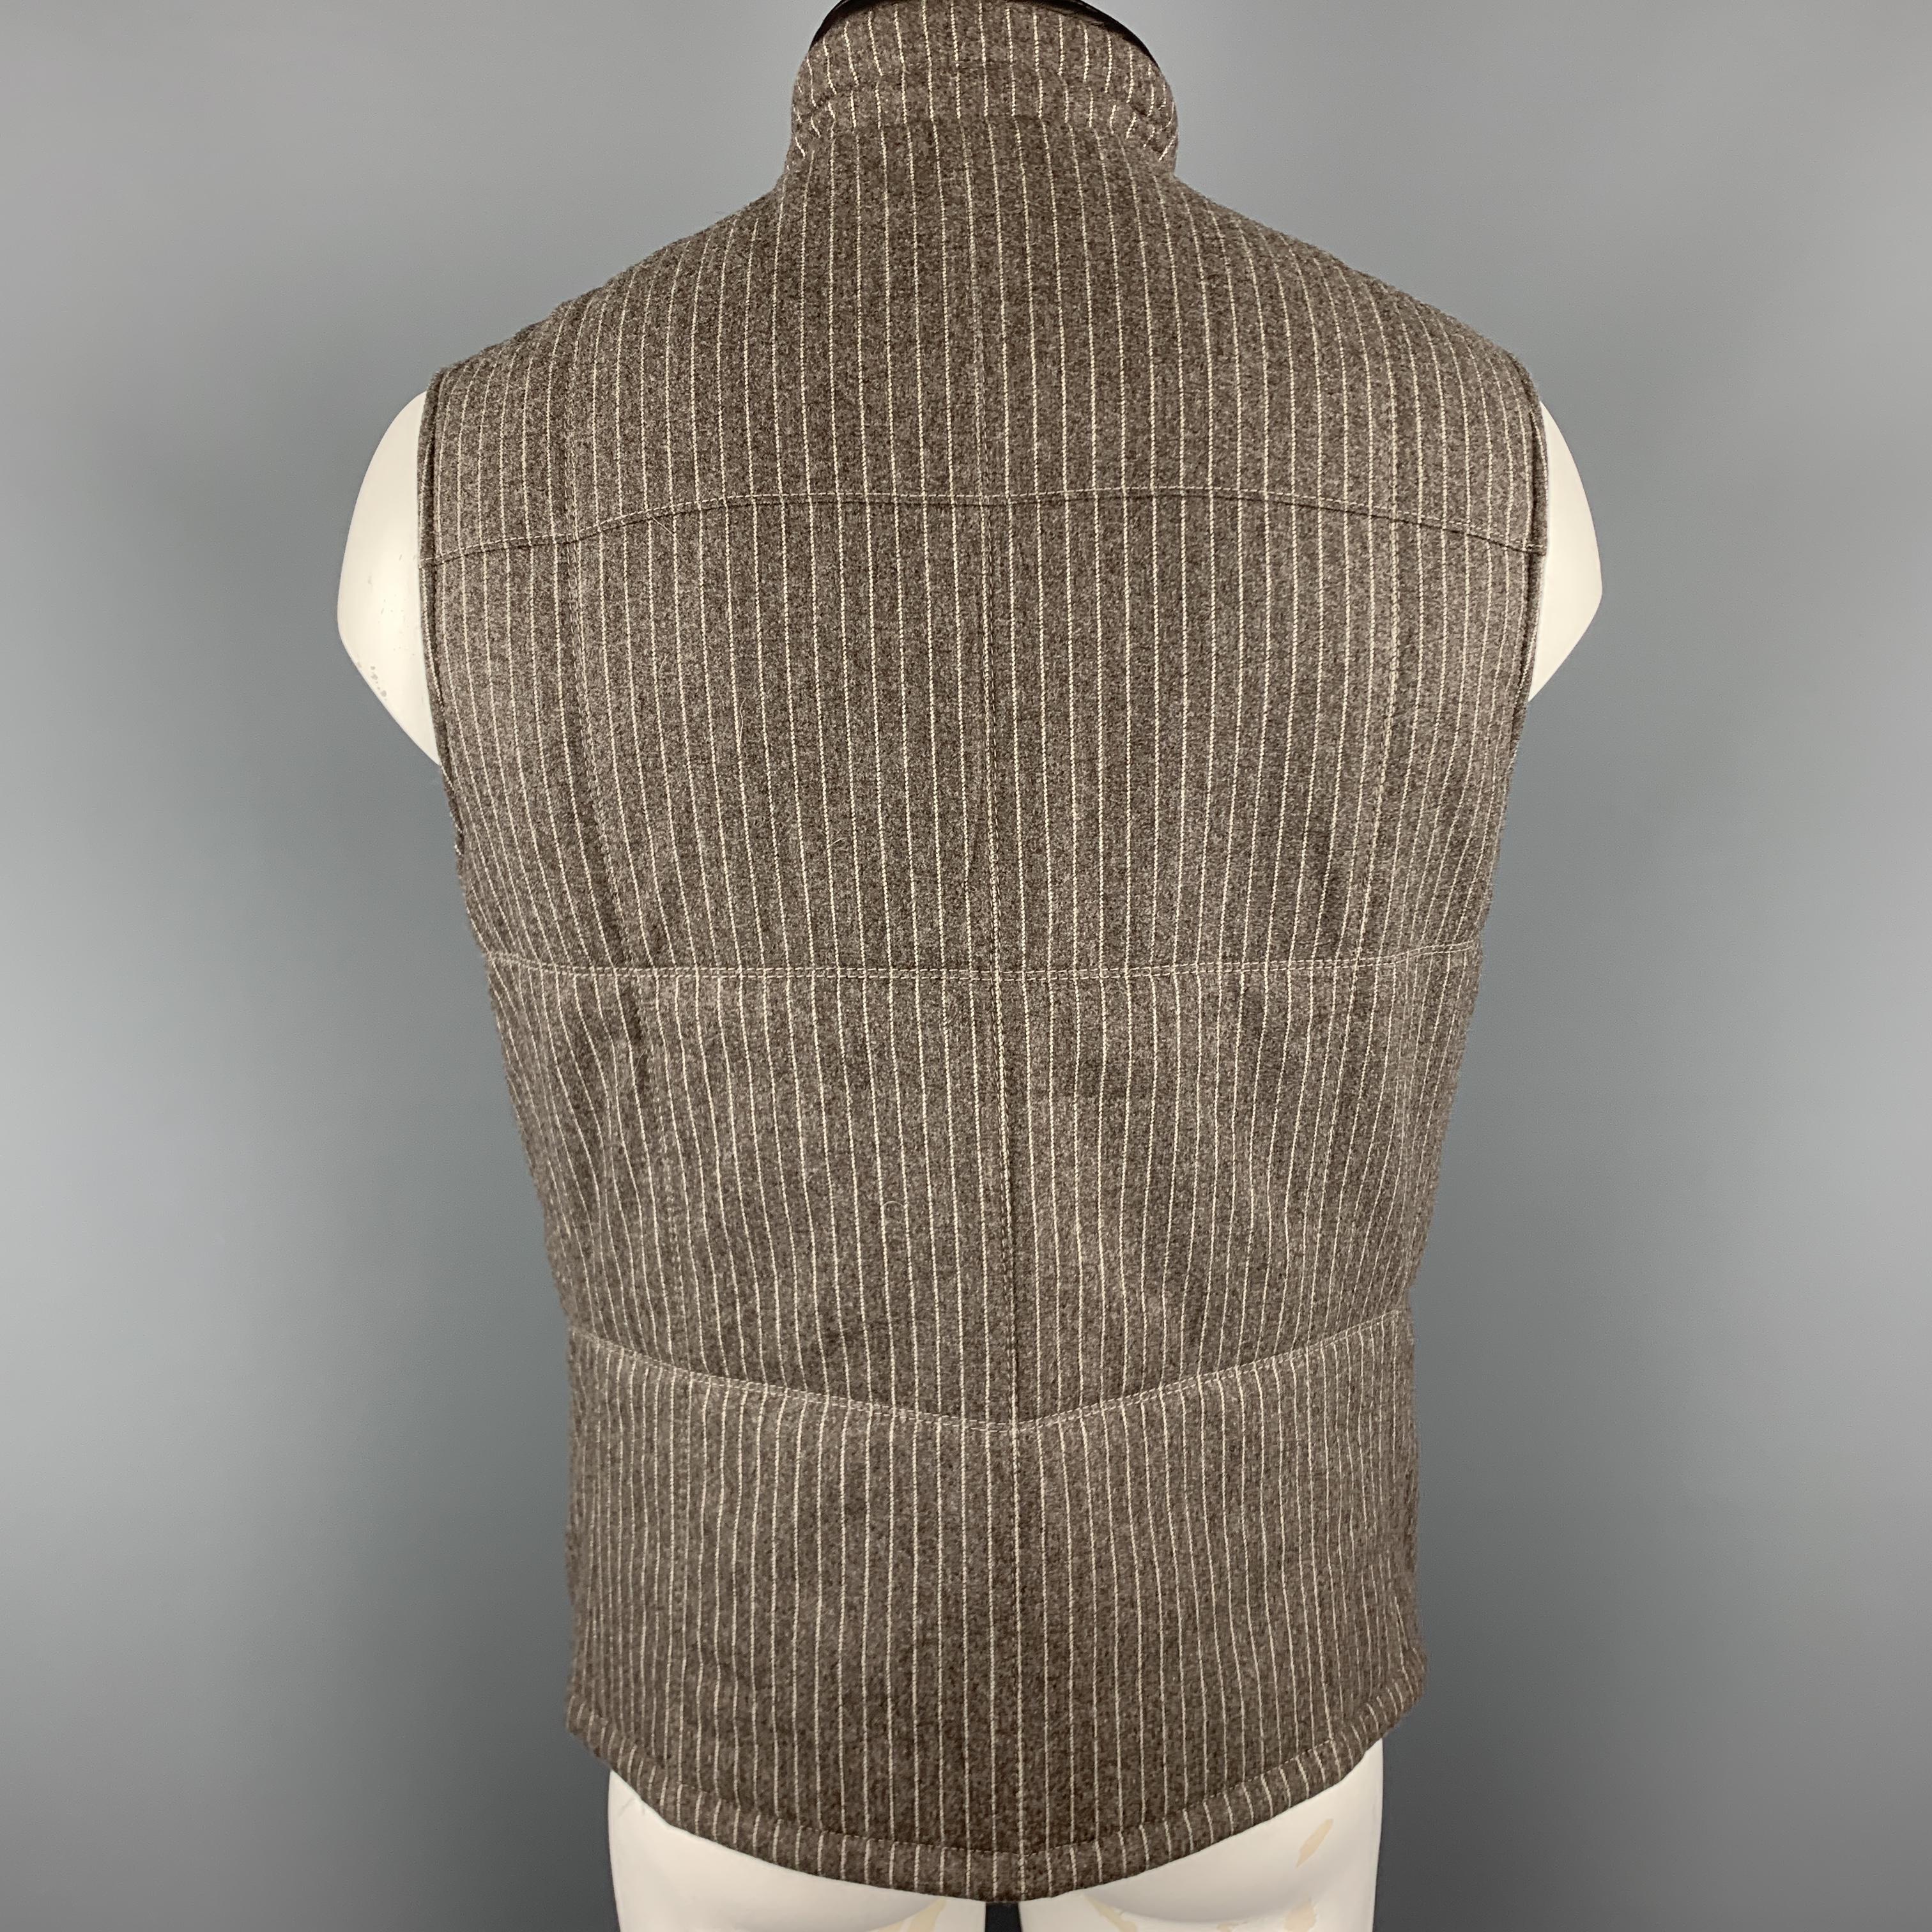 Men's ERMENEGILDO ZEGNA L Taupe Pinstripe Leather Trimmed Reversible Vest